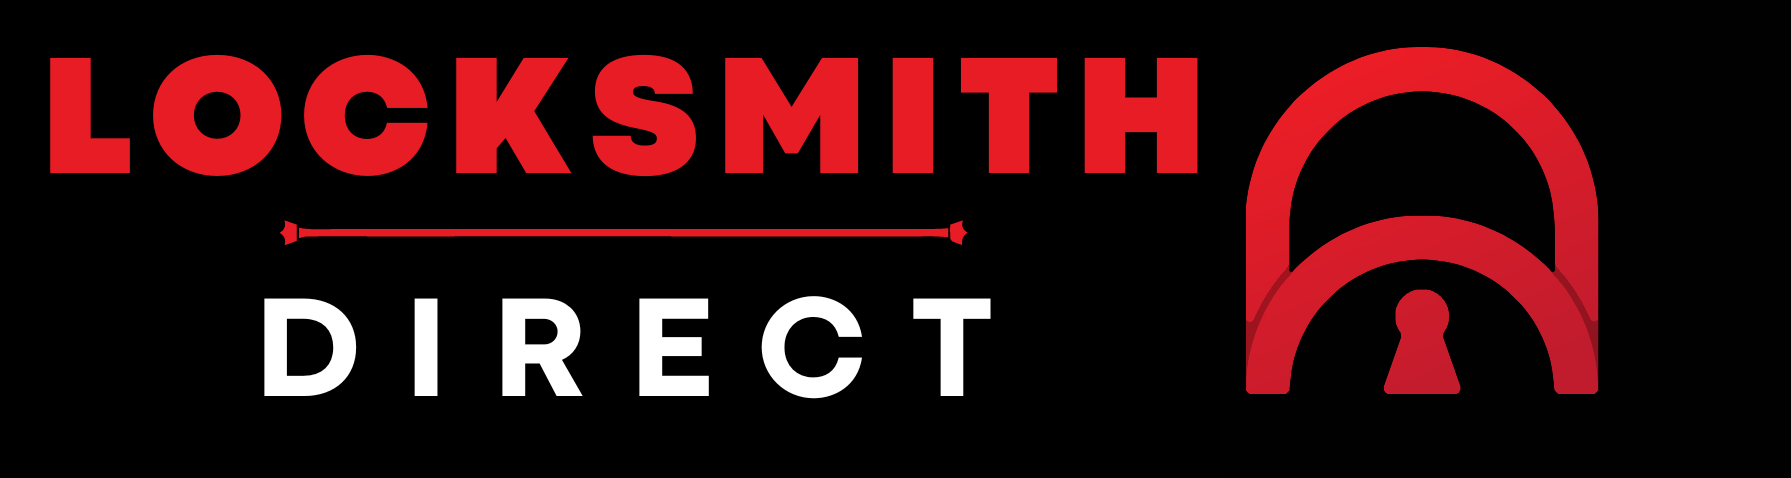 Locksmith Direct Southampton Banner Logo